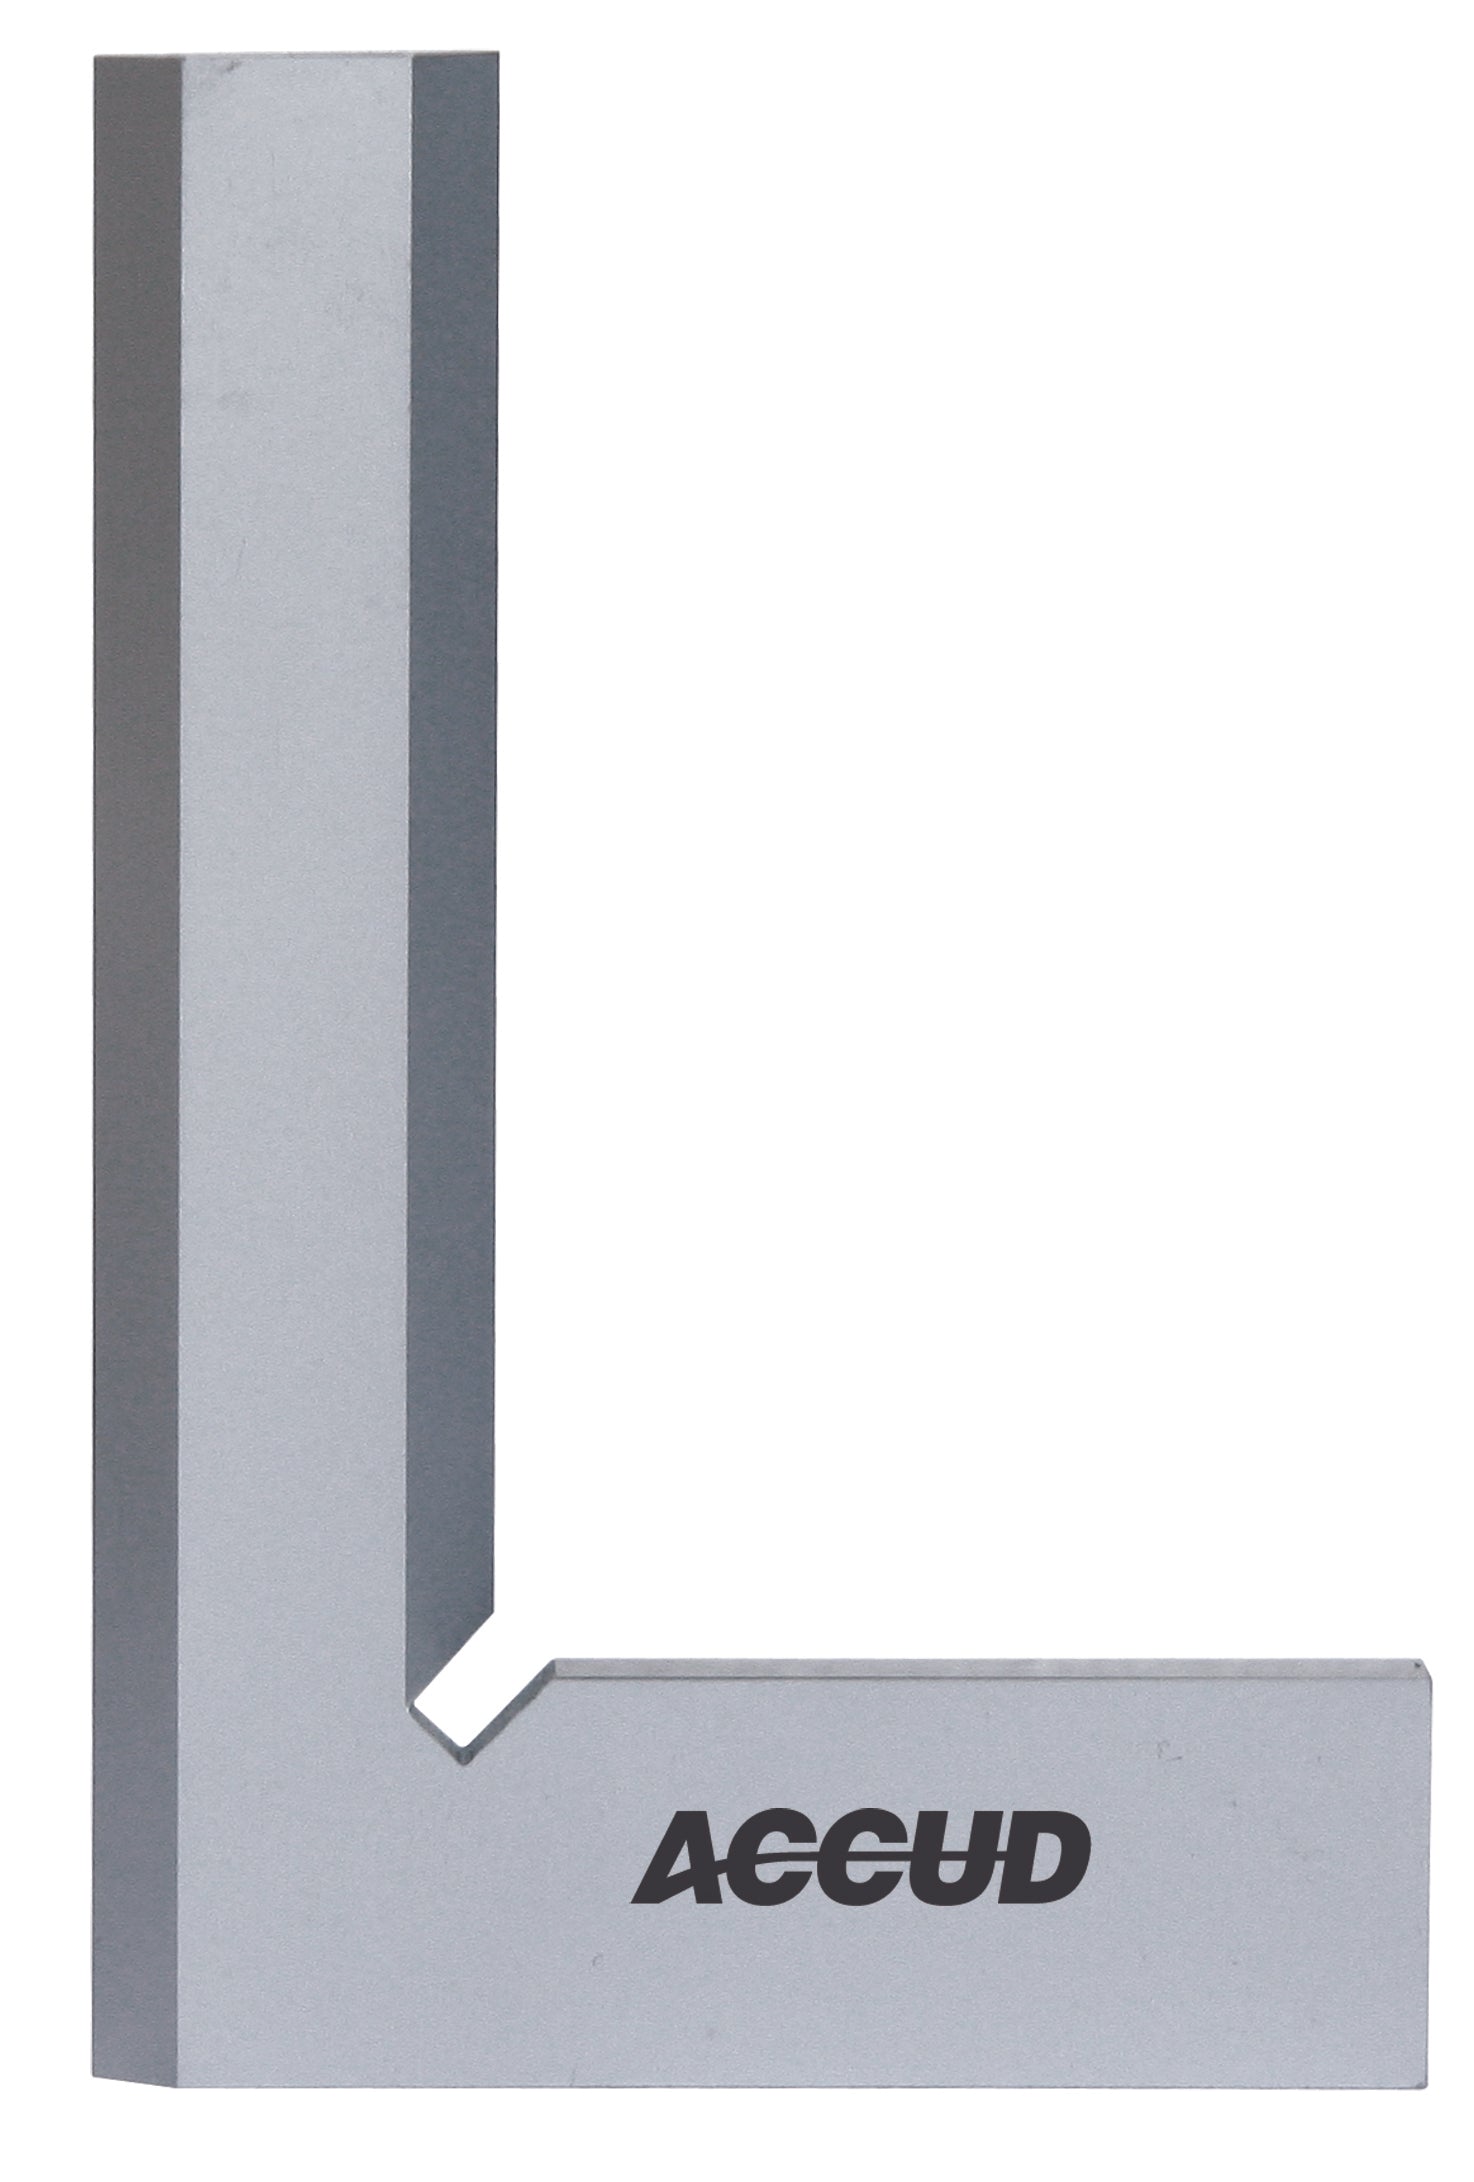 accud-beveled-edge-square-90-deg.-grade-0-75x50mm-ac832-003-10-1